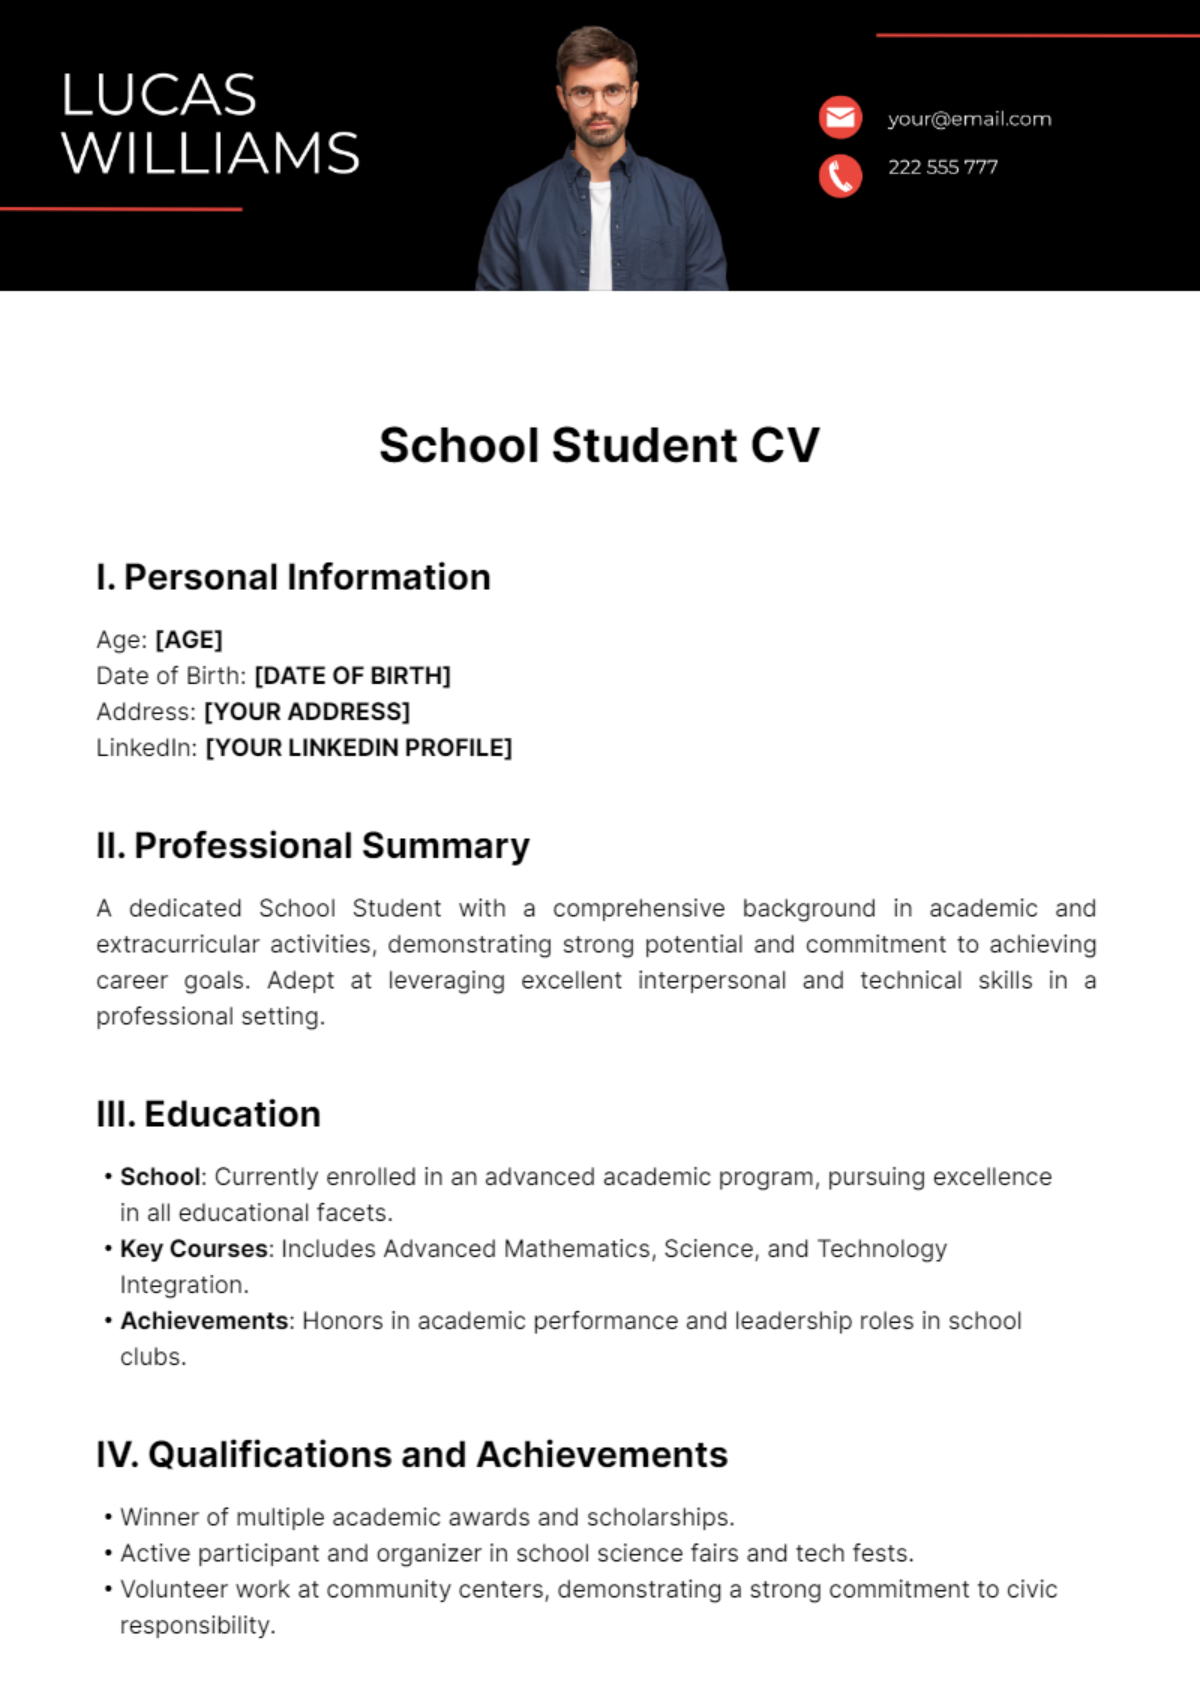 School Student CV Template